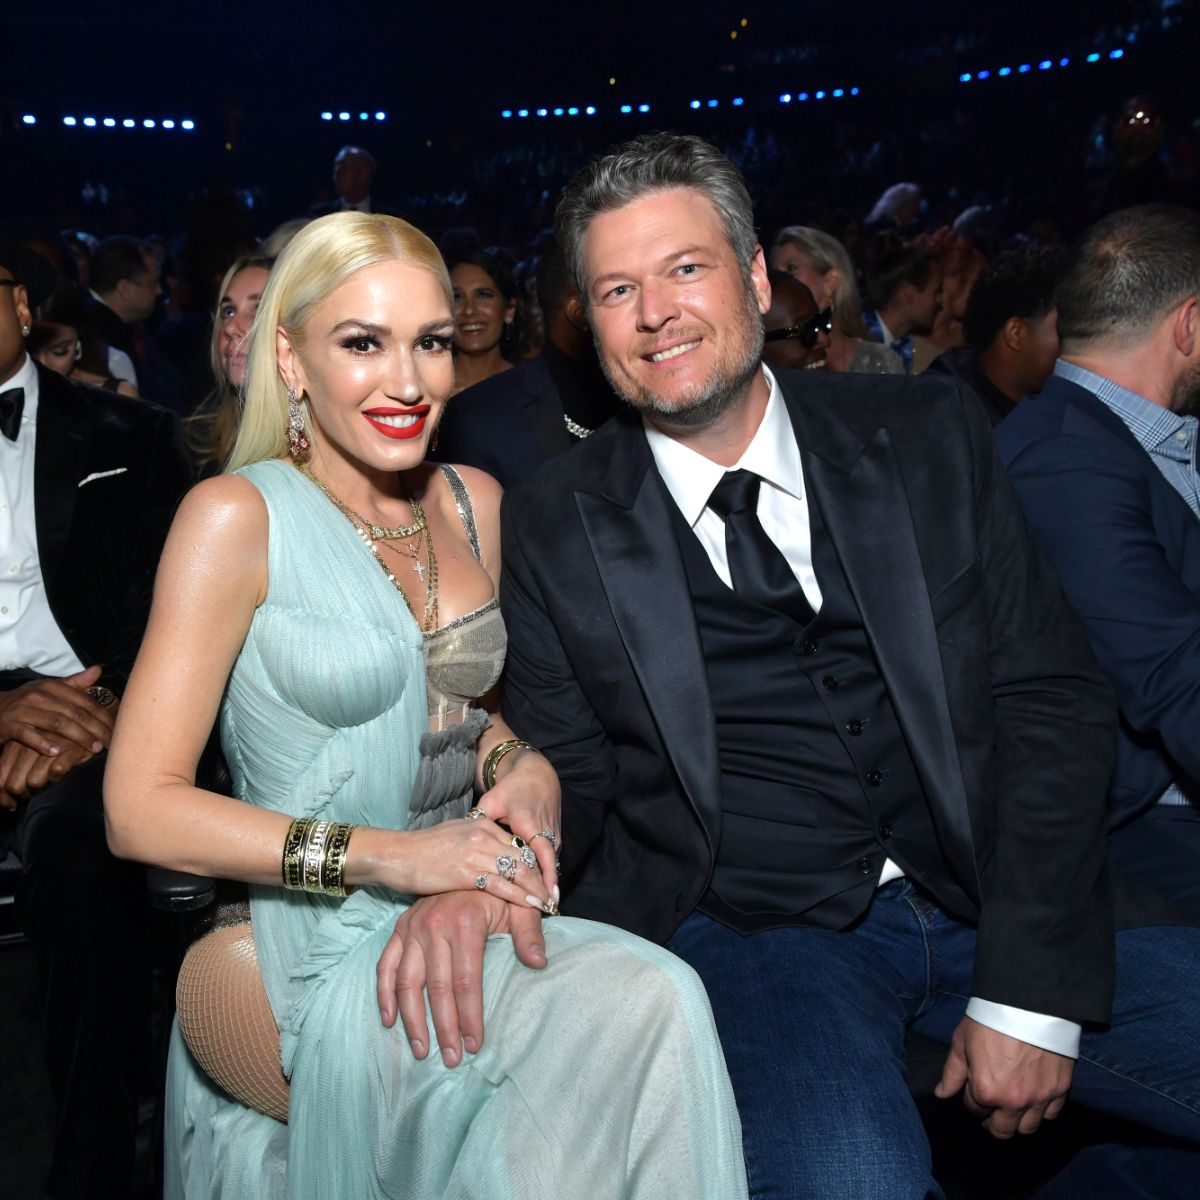 Gwen Stefani and husband